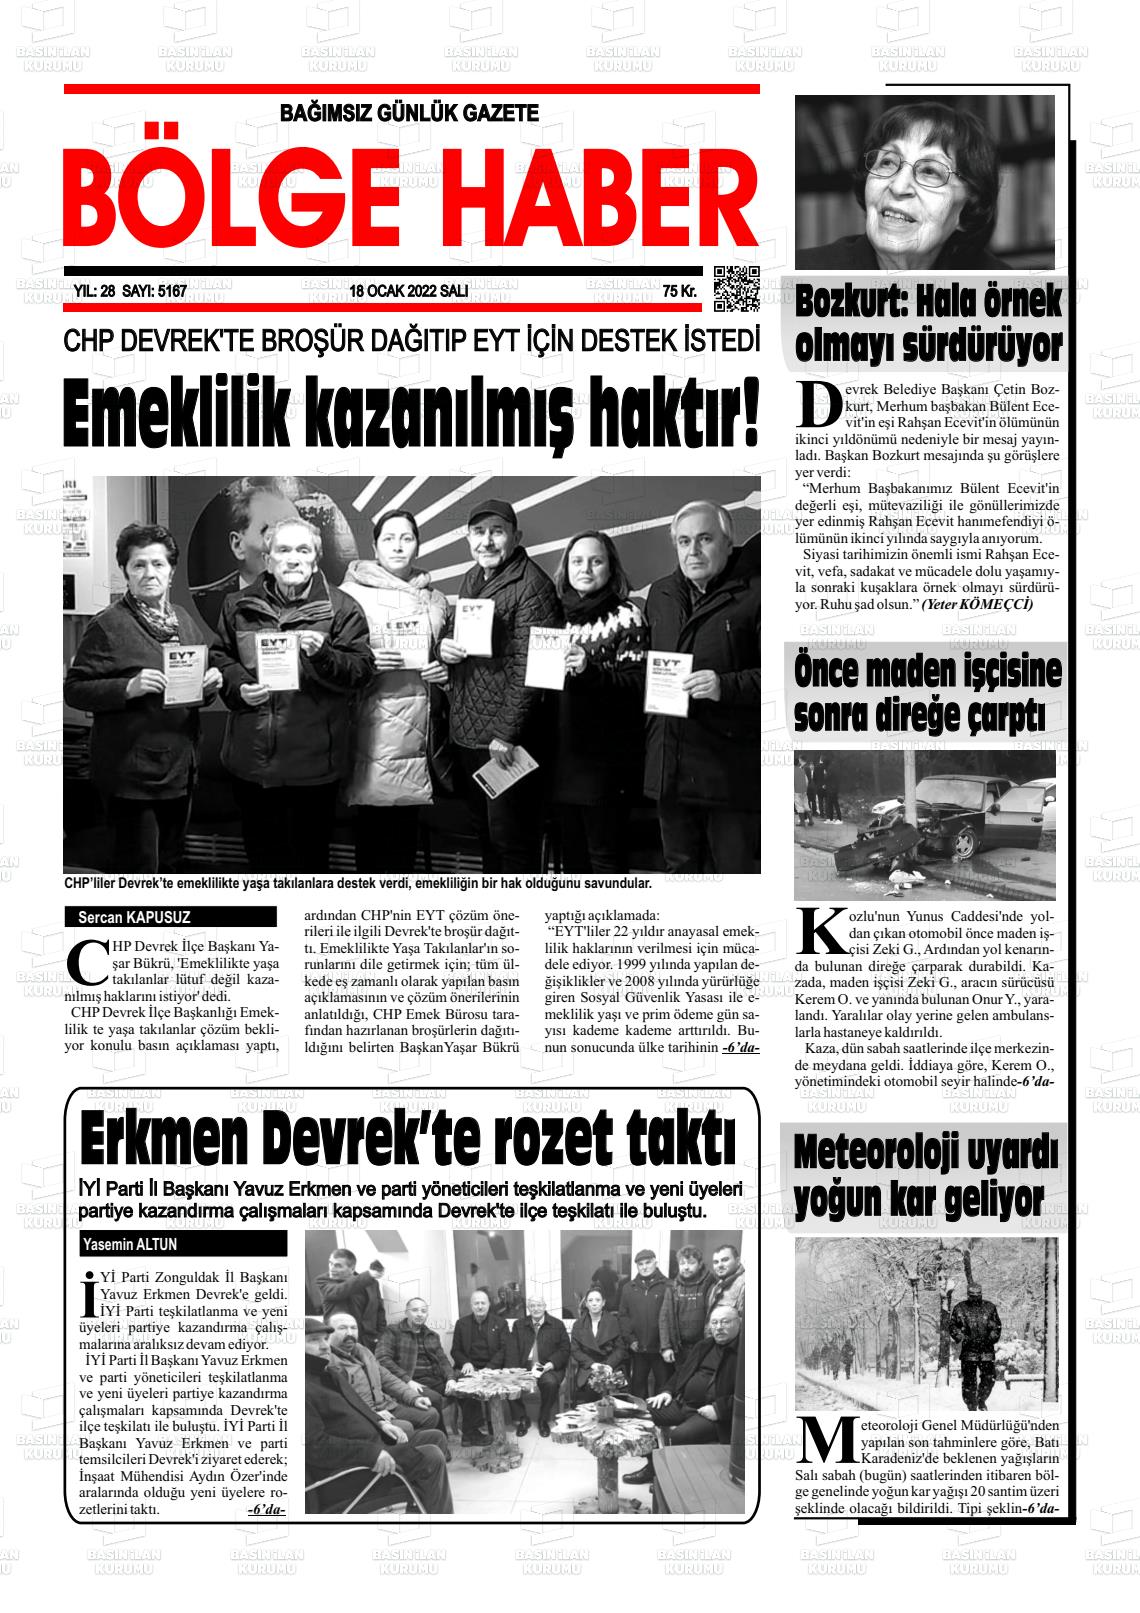 18 Ocak 2022 Devrek Bölge Haber Gazete Manşeti